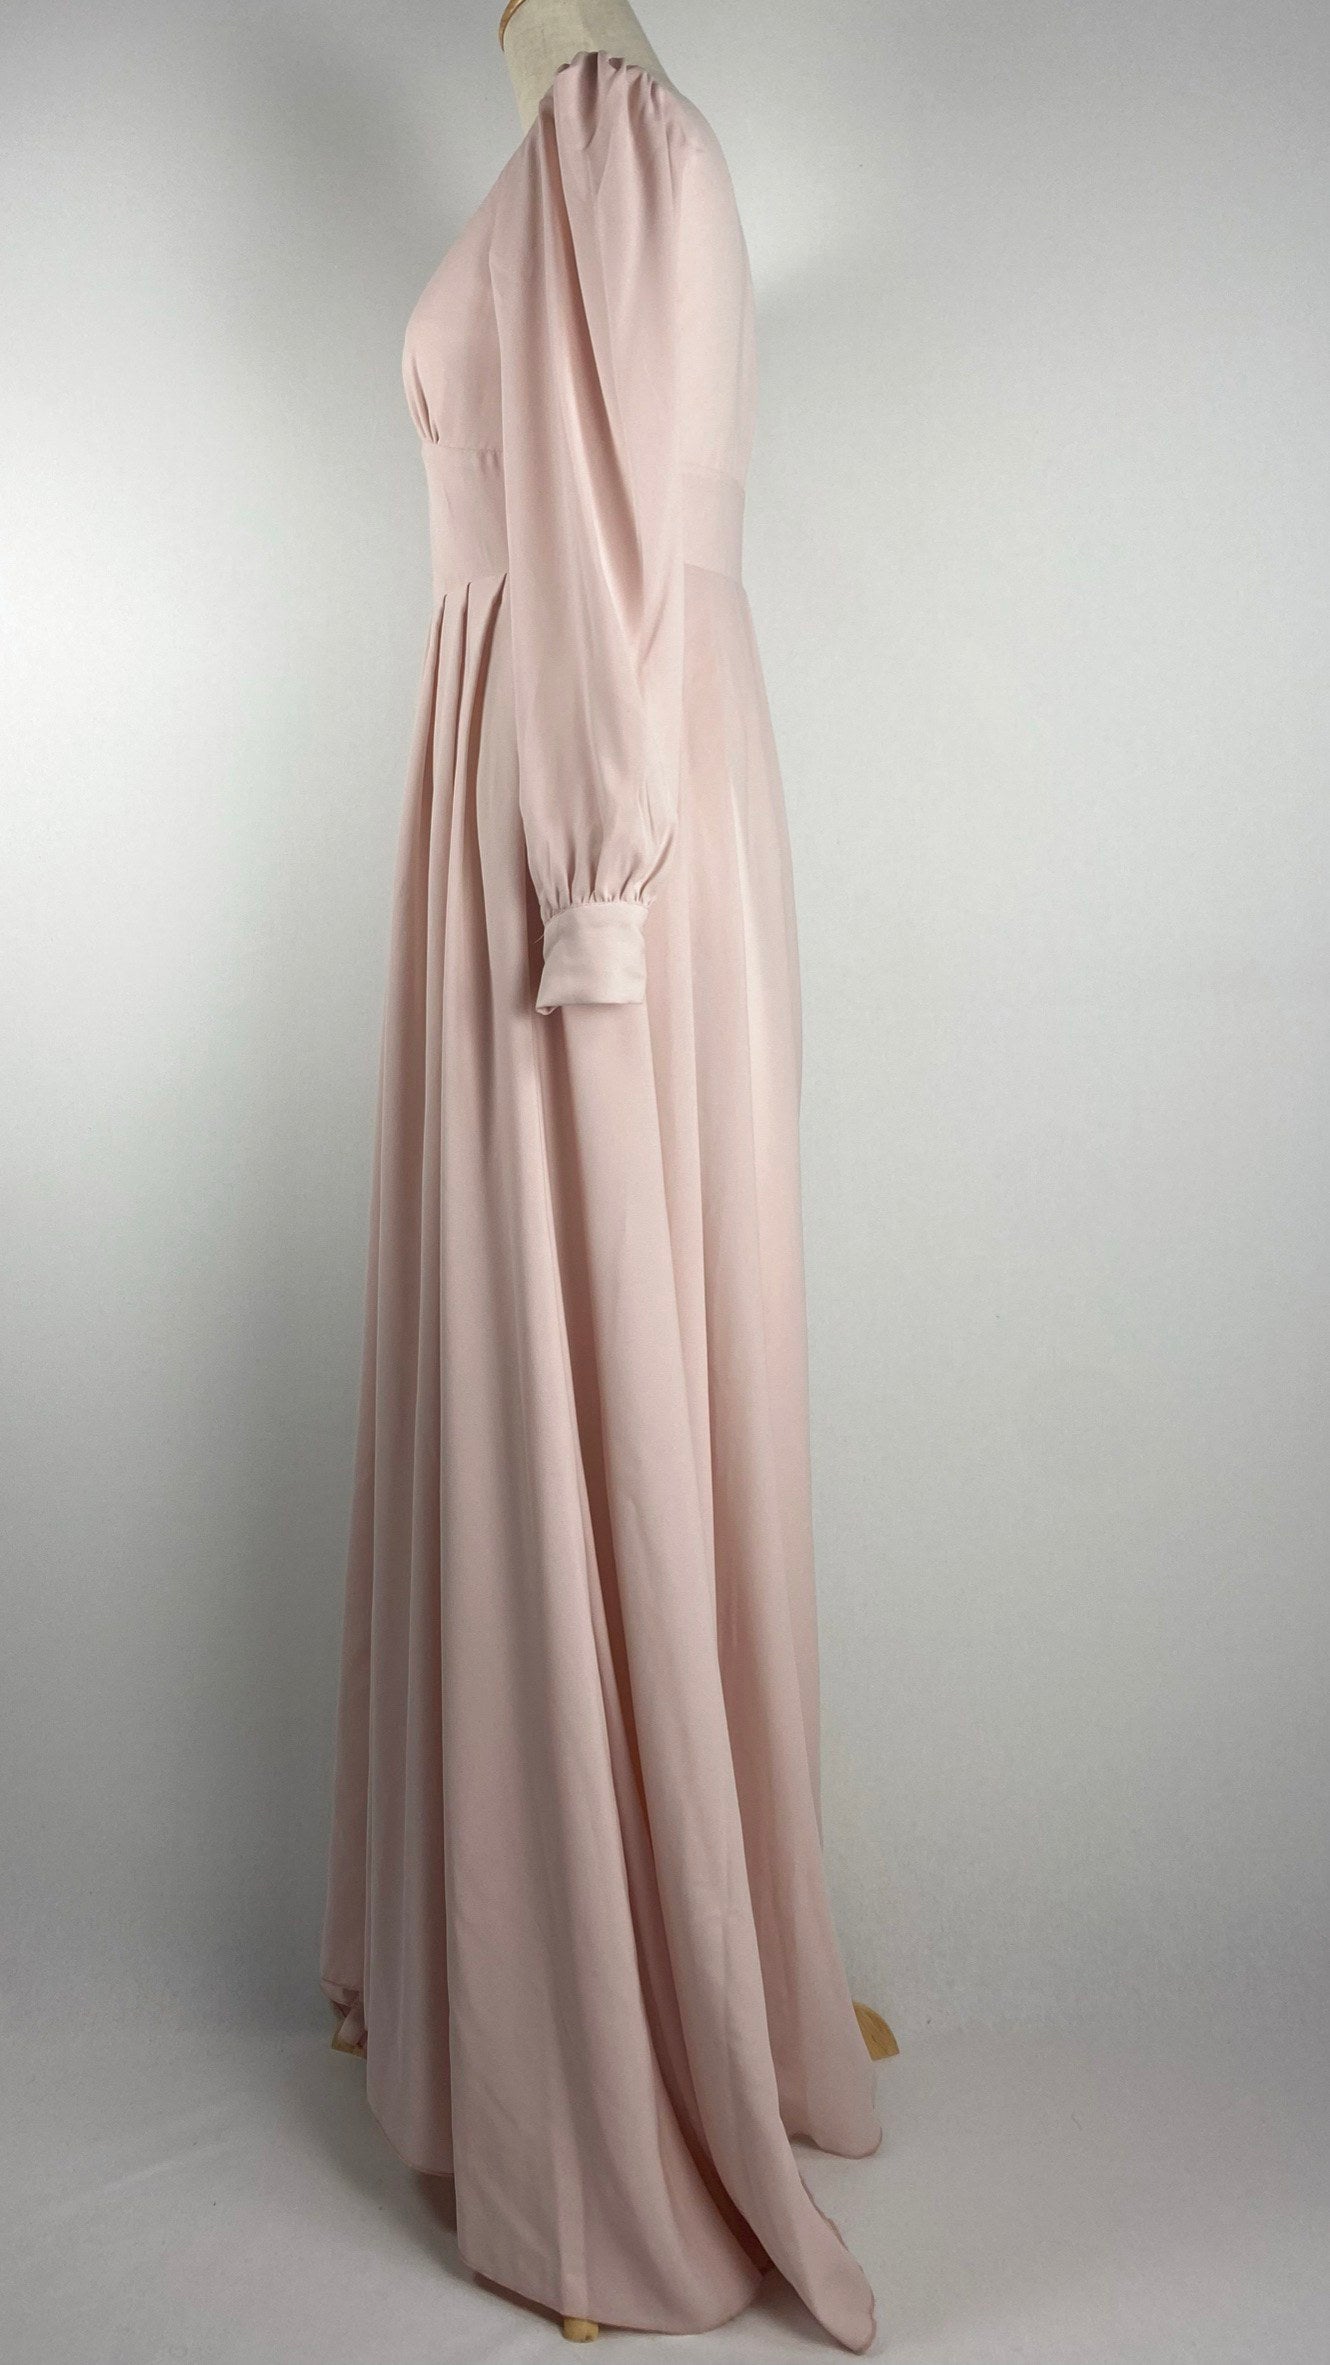 Long Sleeve Pleated Maxi Dress, Pink